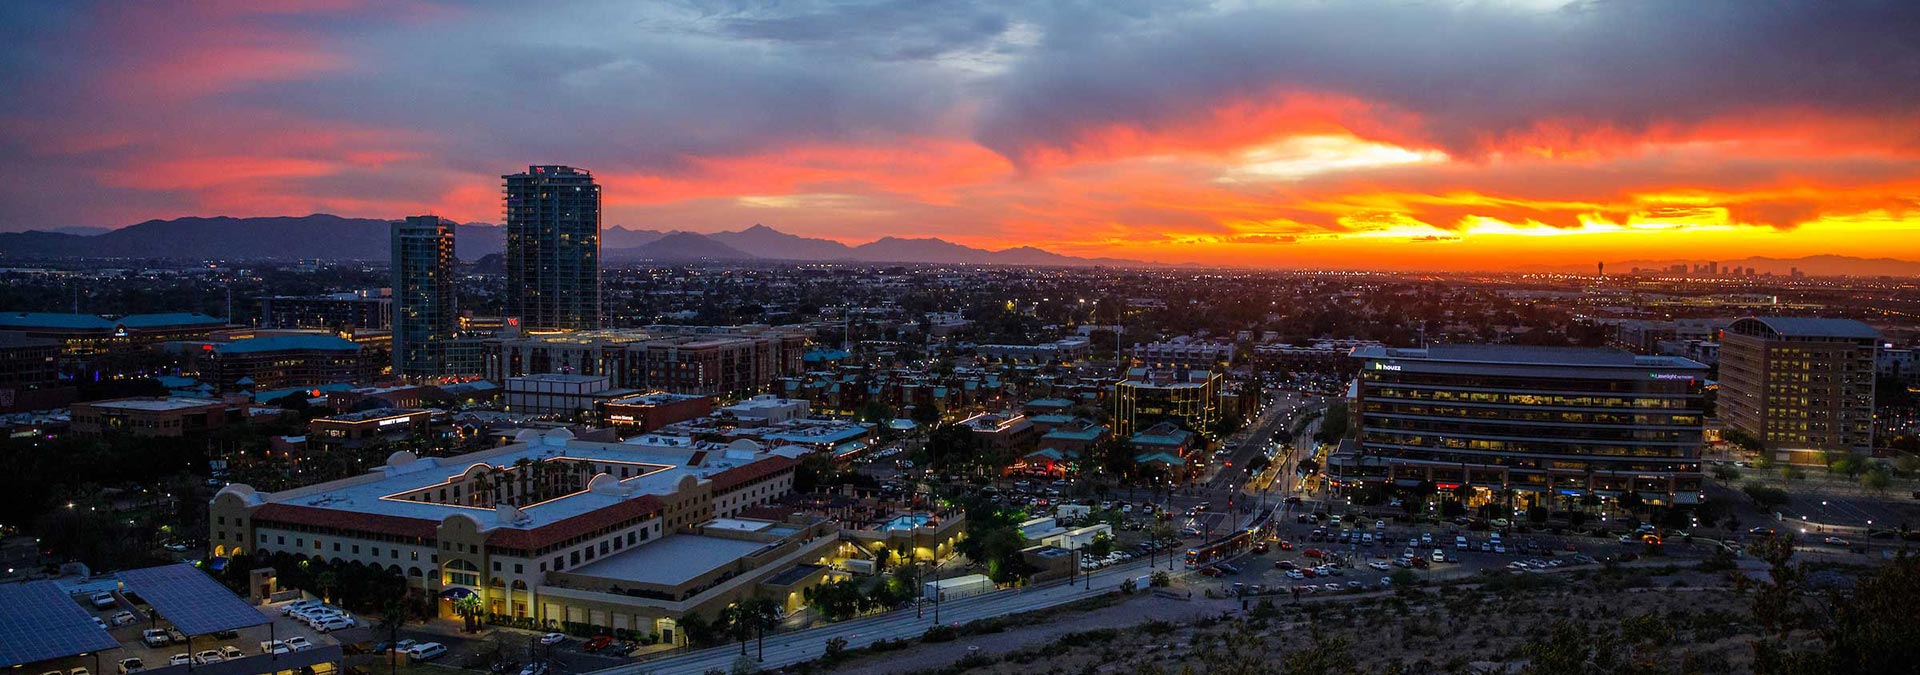 Tempe Arizona skyline at sunset